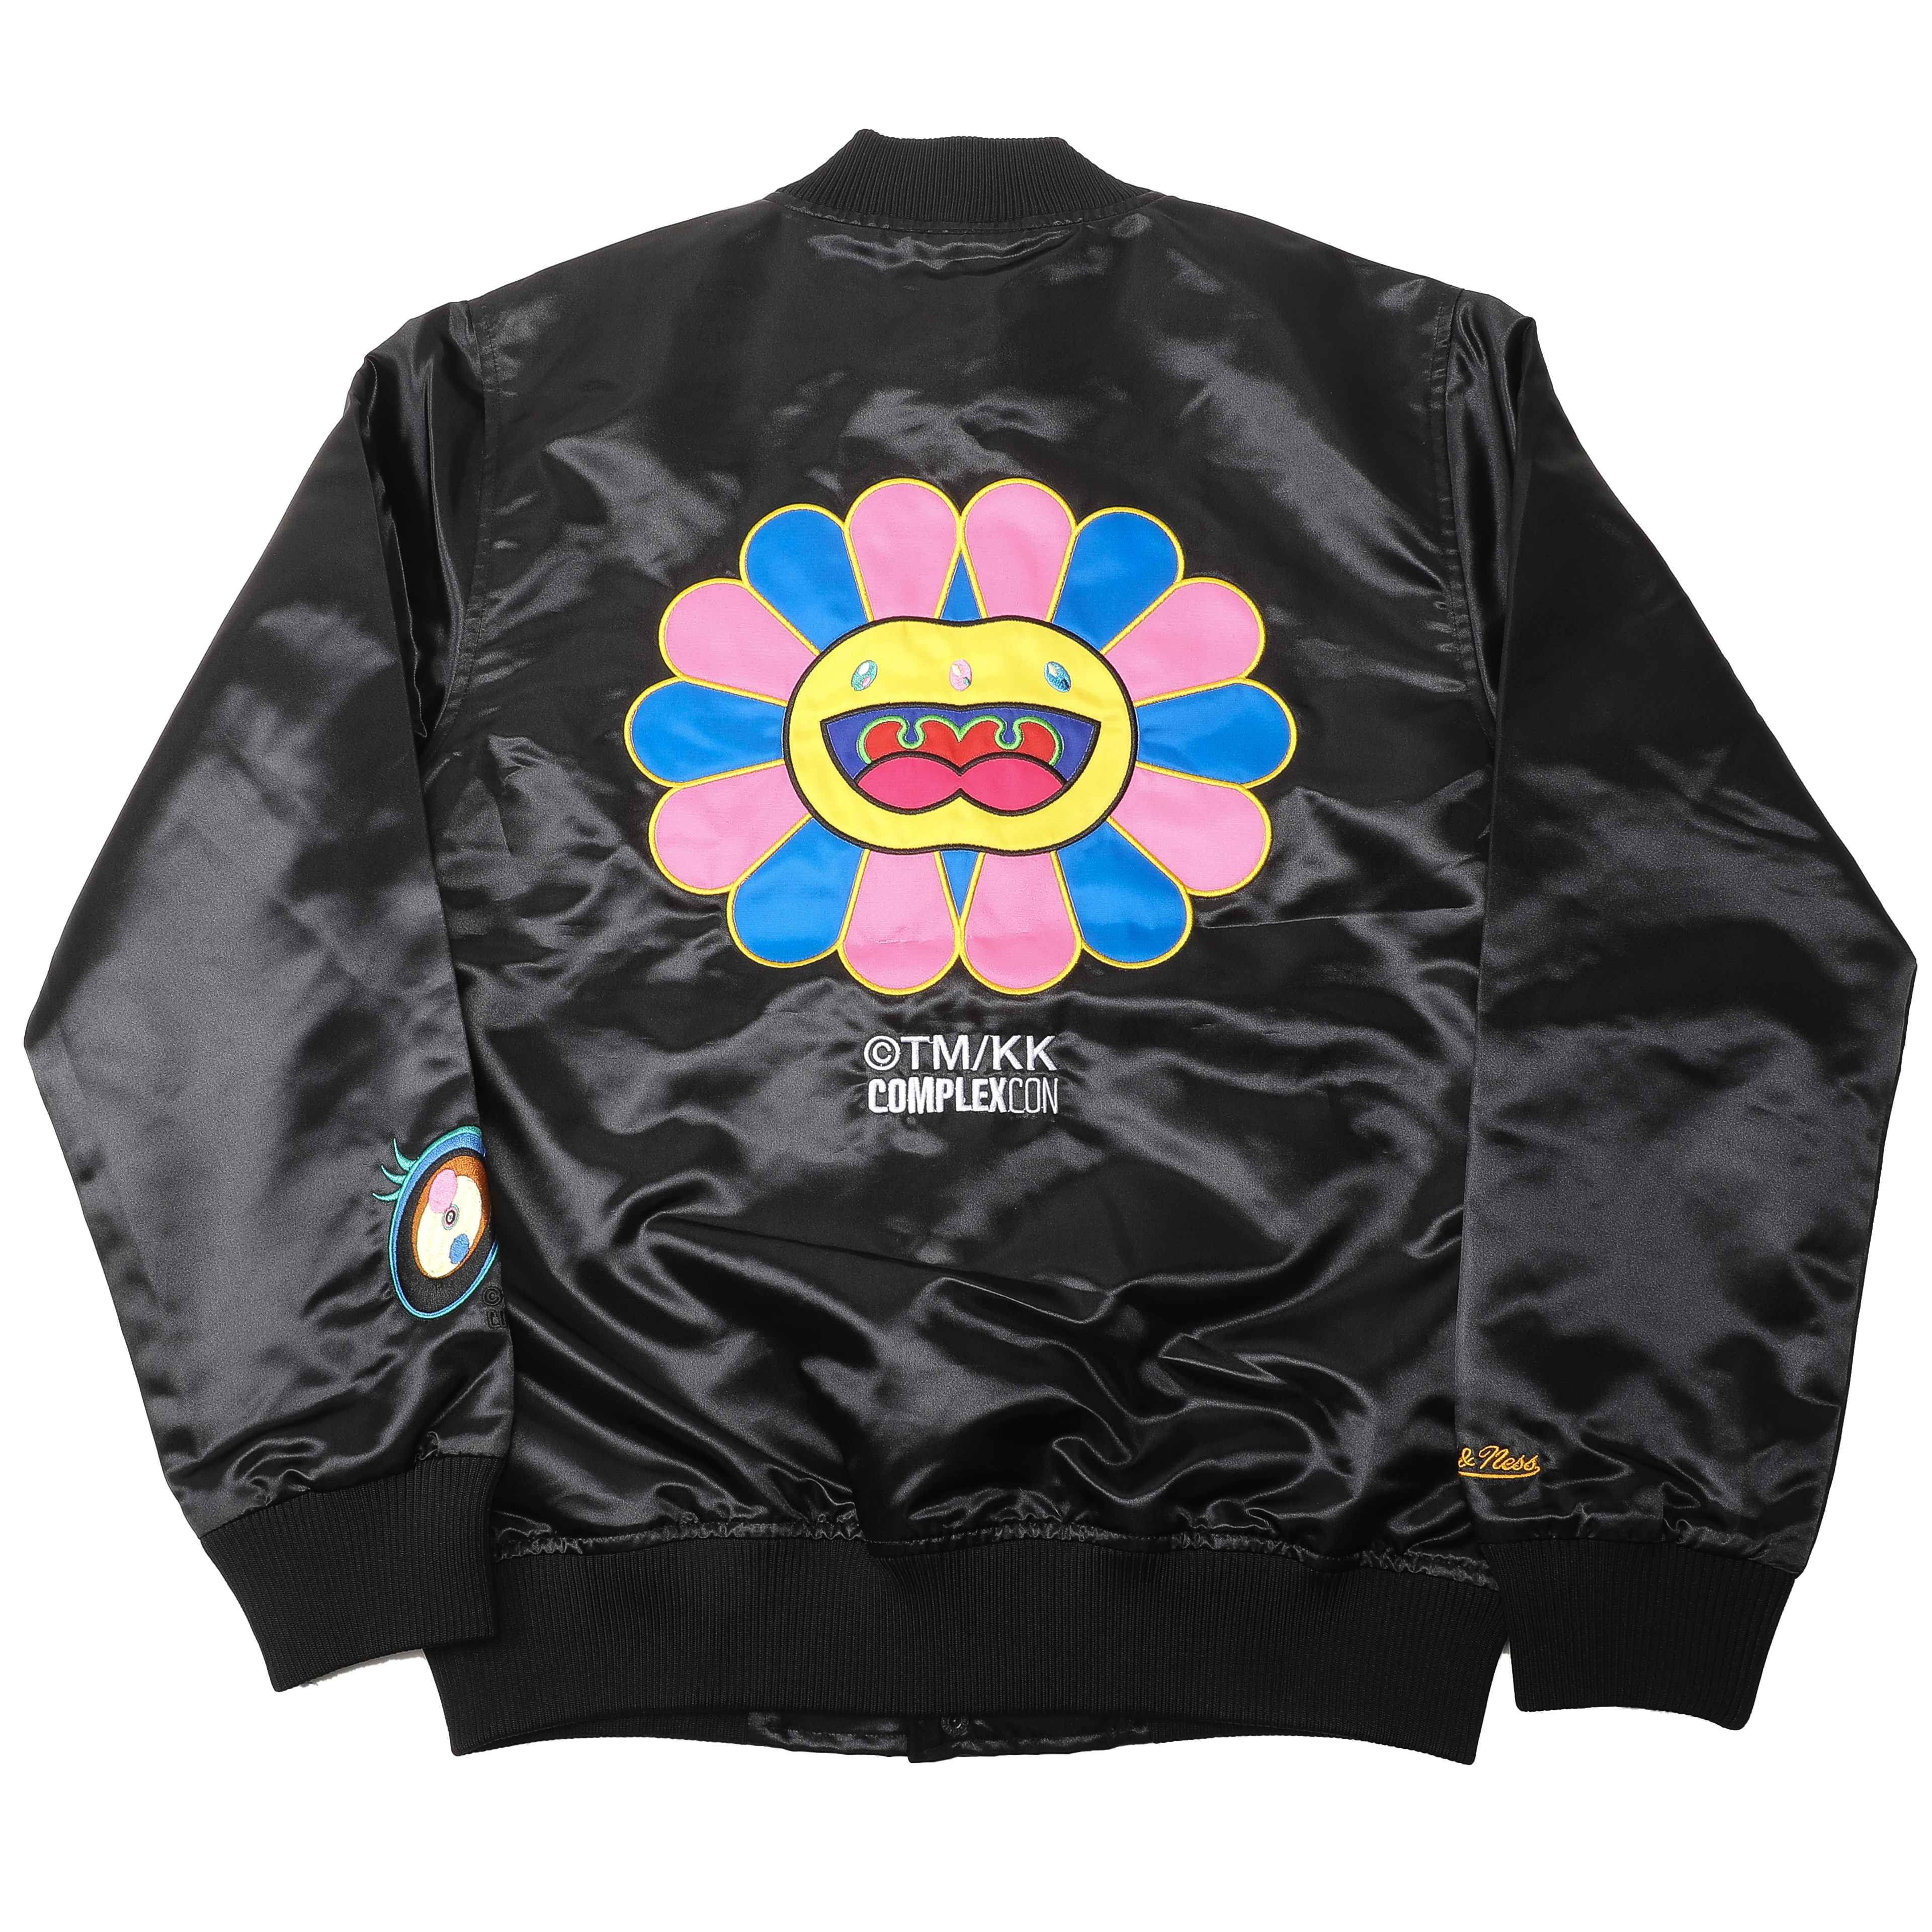 black lakers jacket